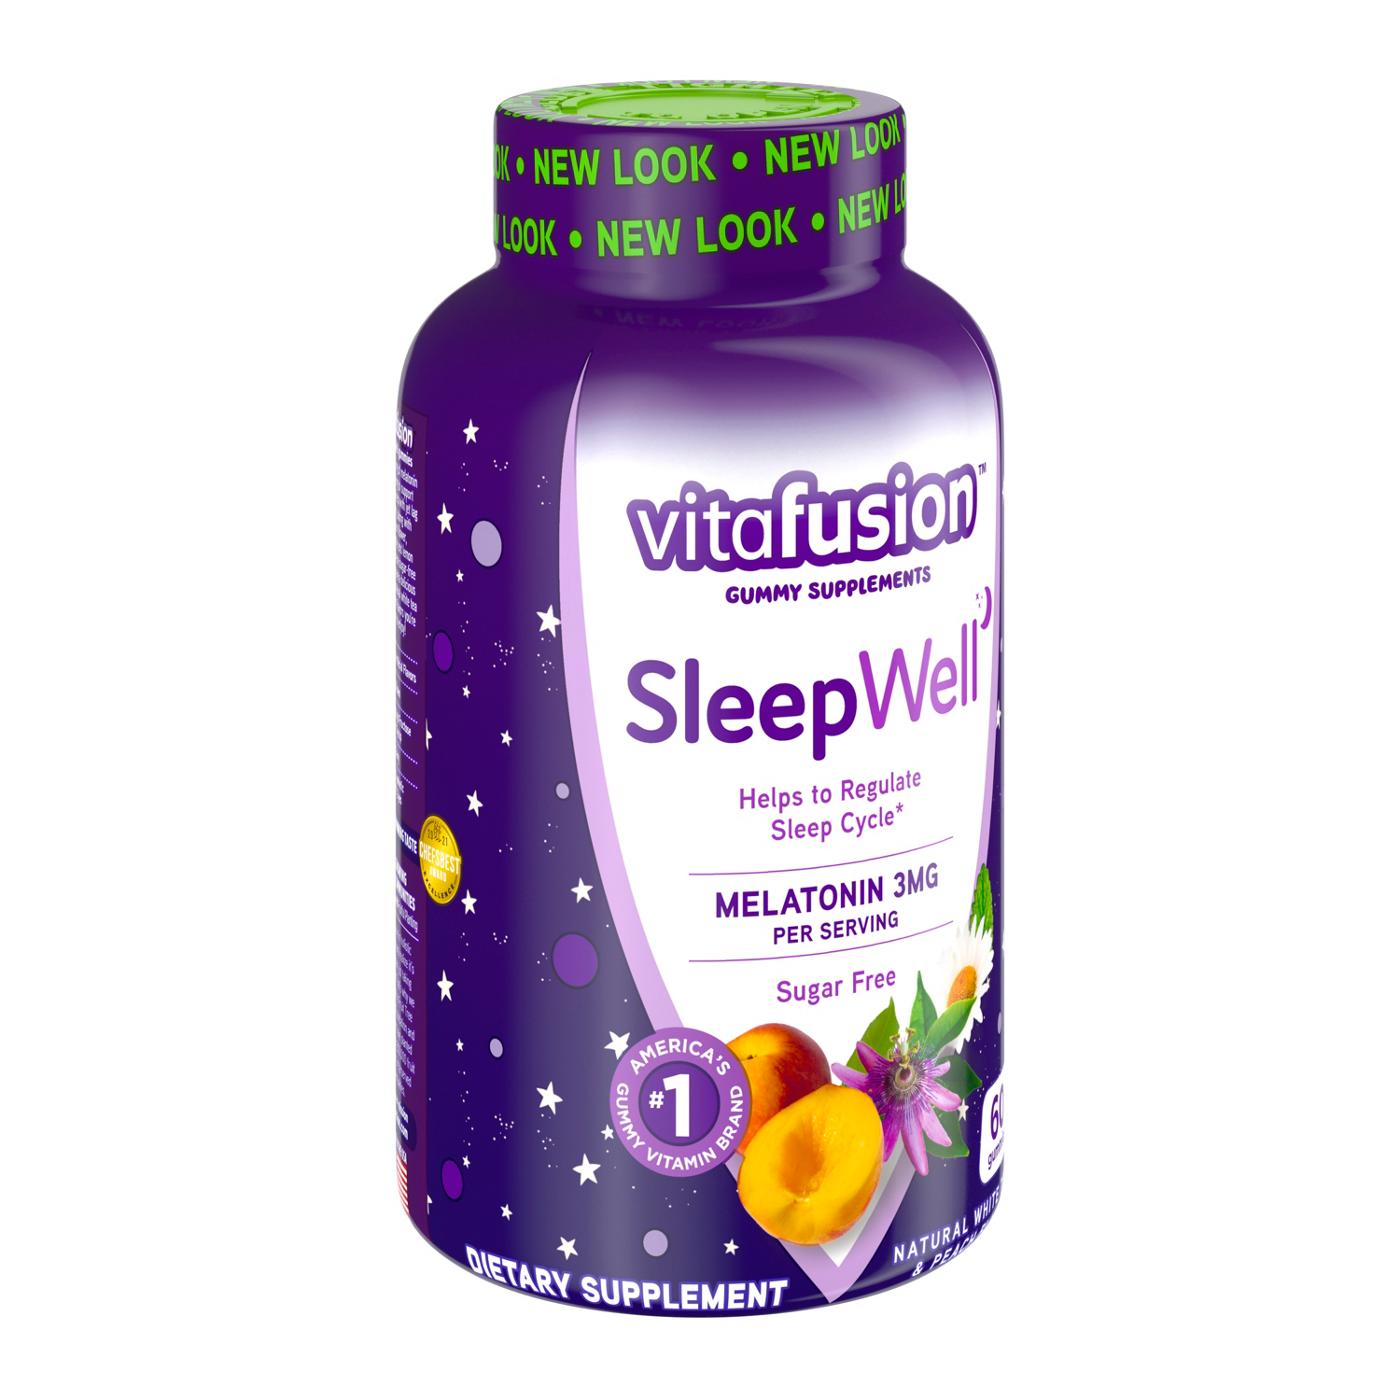 Vitafusion Sleepwell Sleep Well Gummy Sleep Support for Adults White Tea with Passion Fruit; image 5 of 6